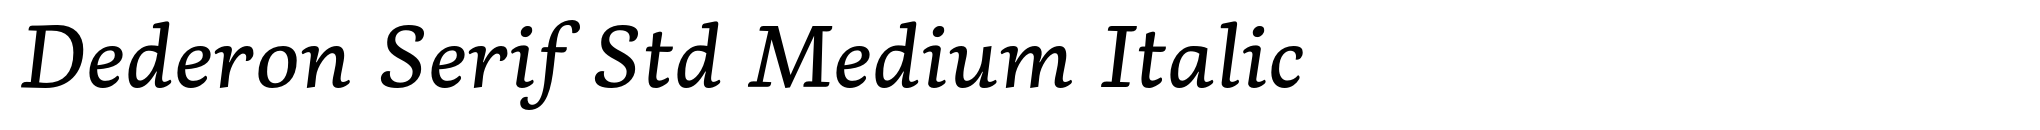 Dederon Serif Std Medium Italic image